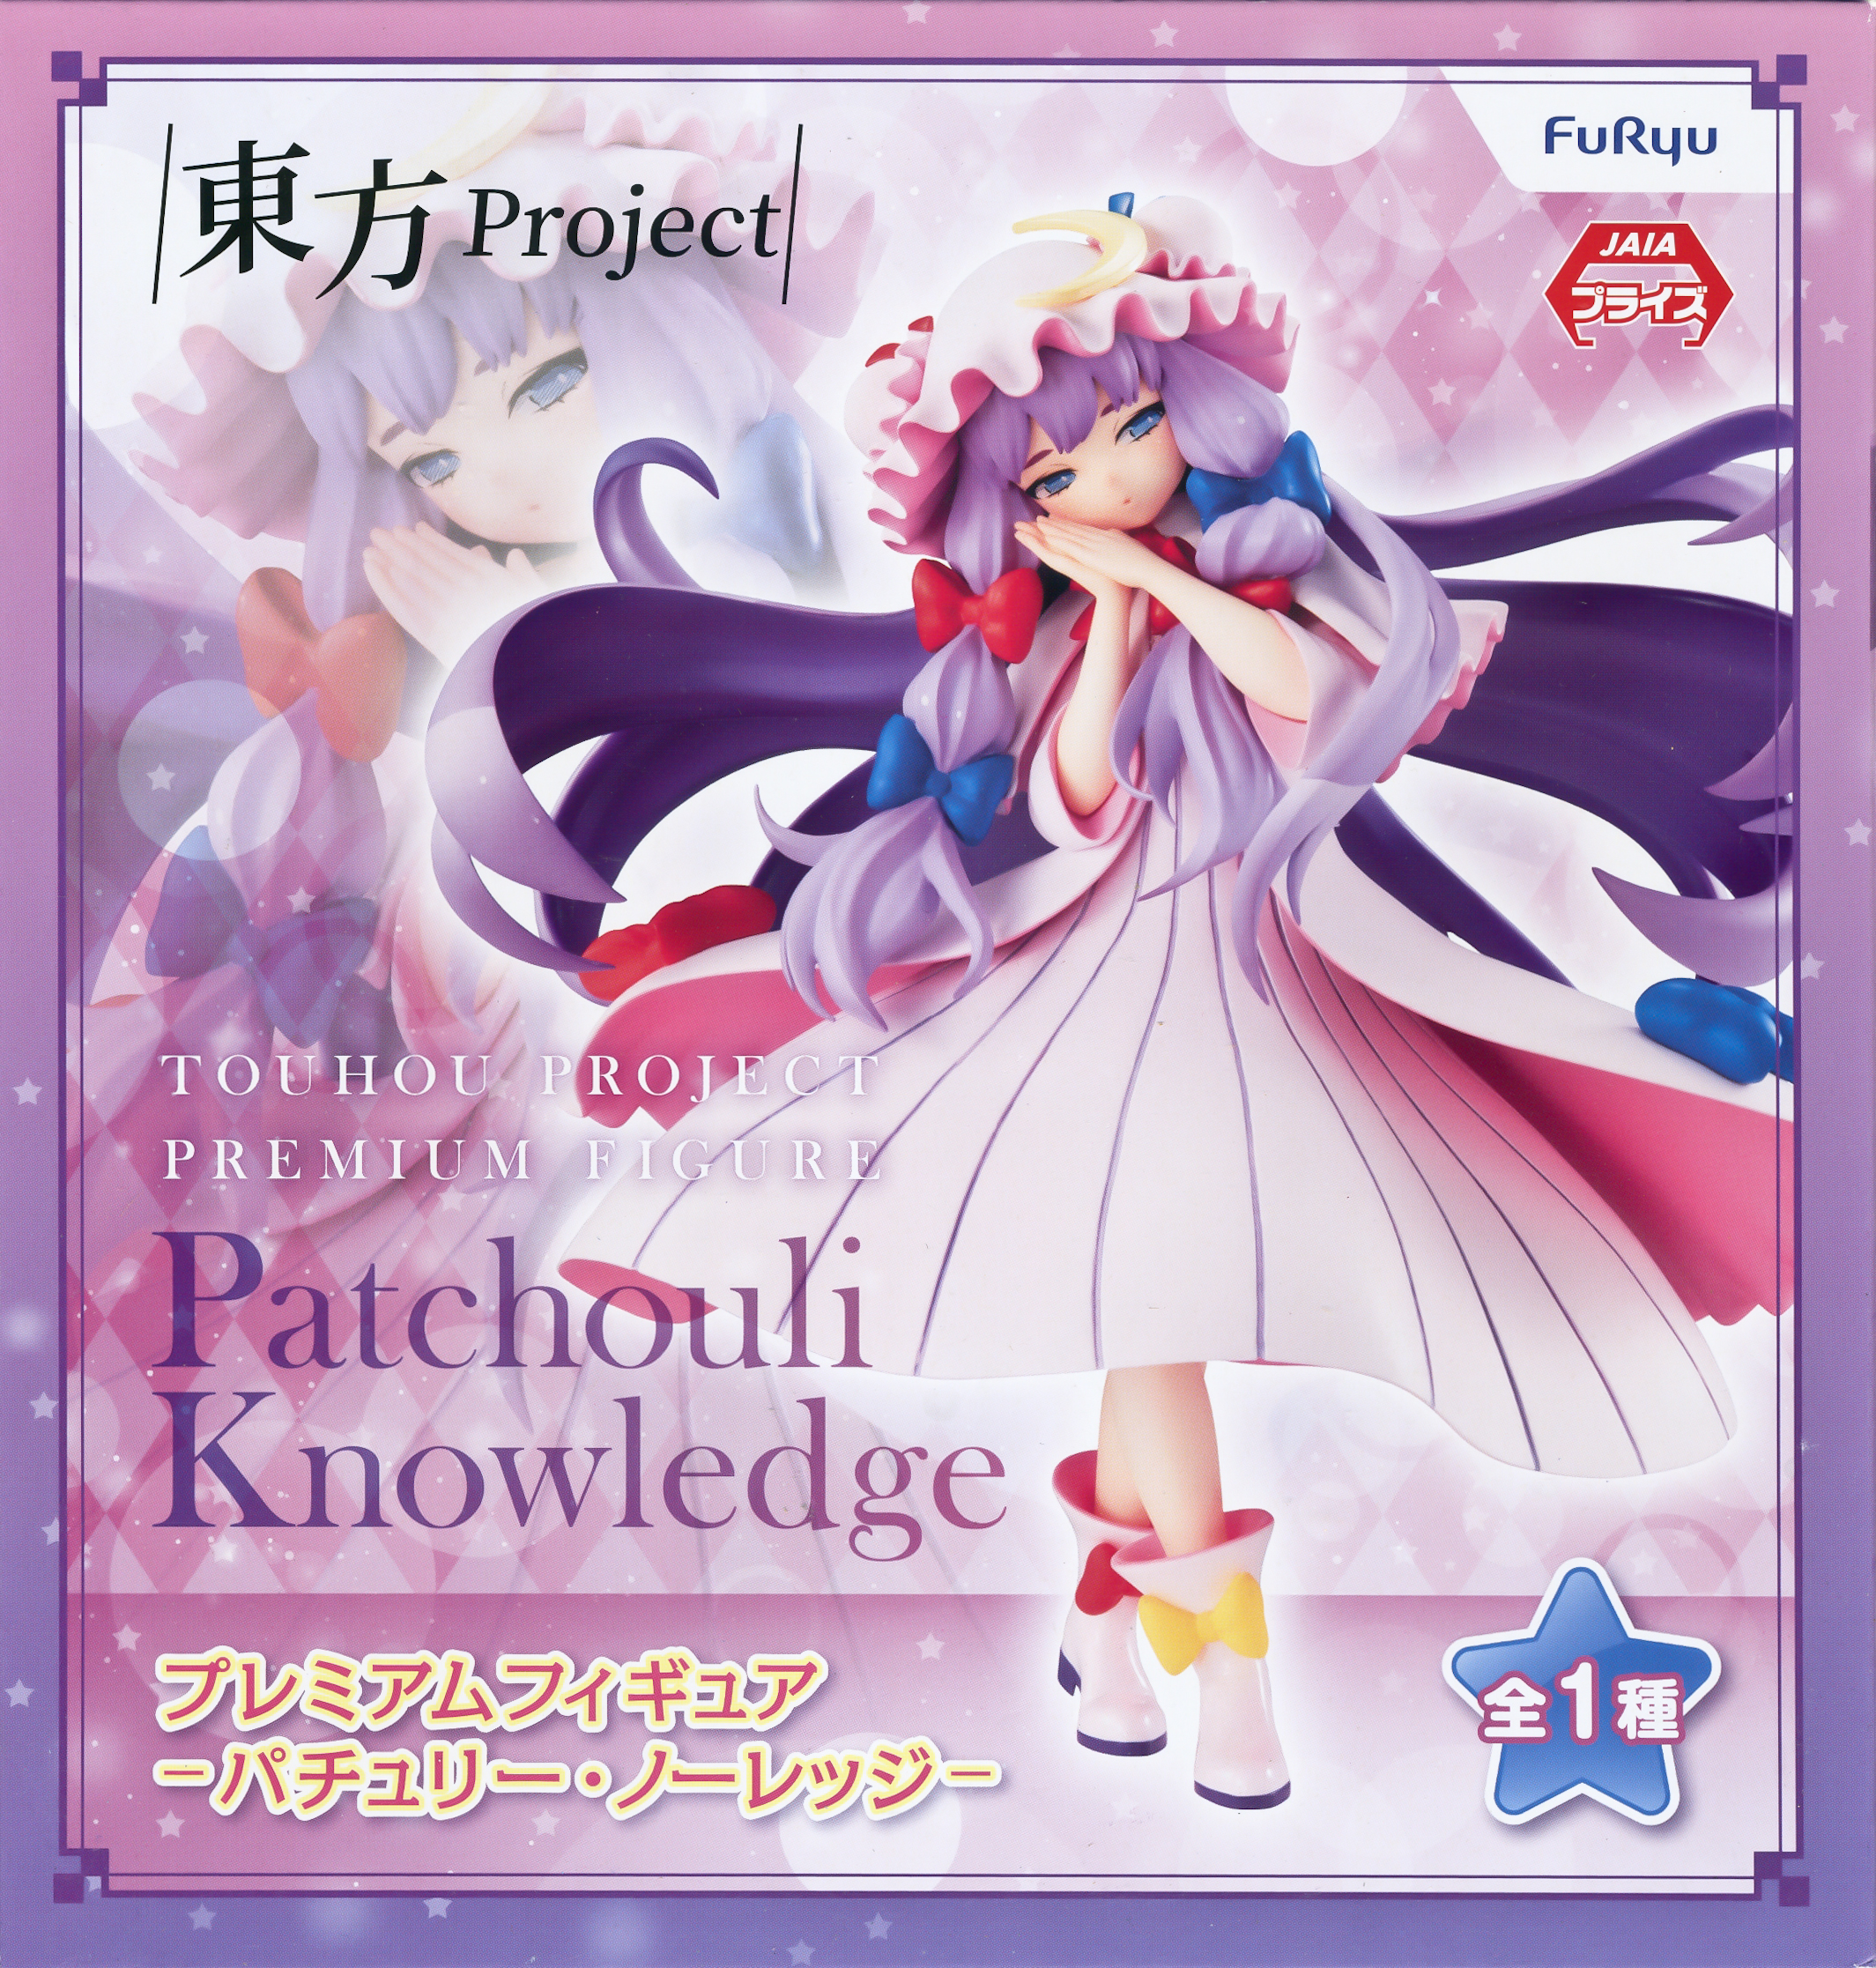 Patchouli Knowledge, Premium Figure, Touhou Project, Furyu